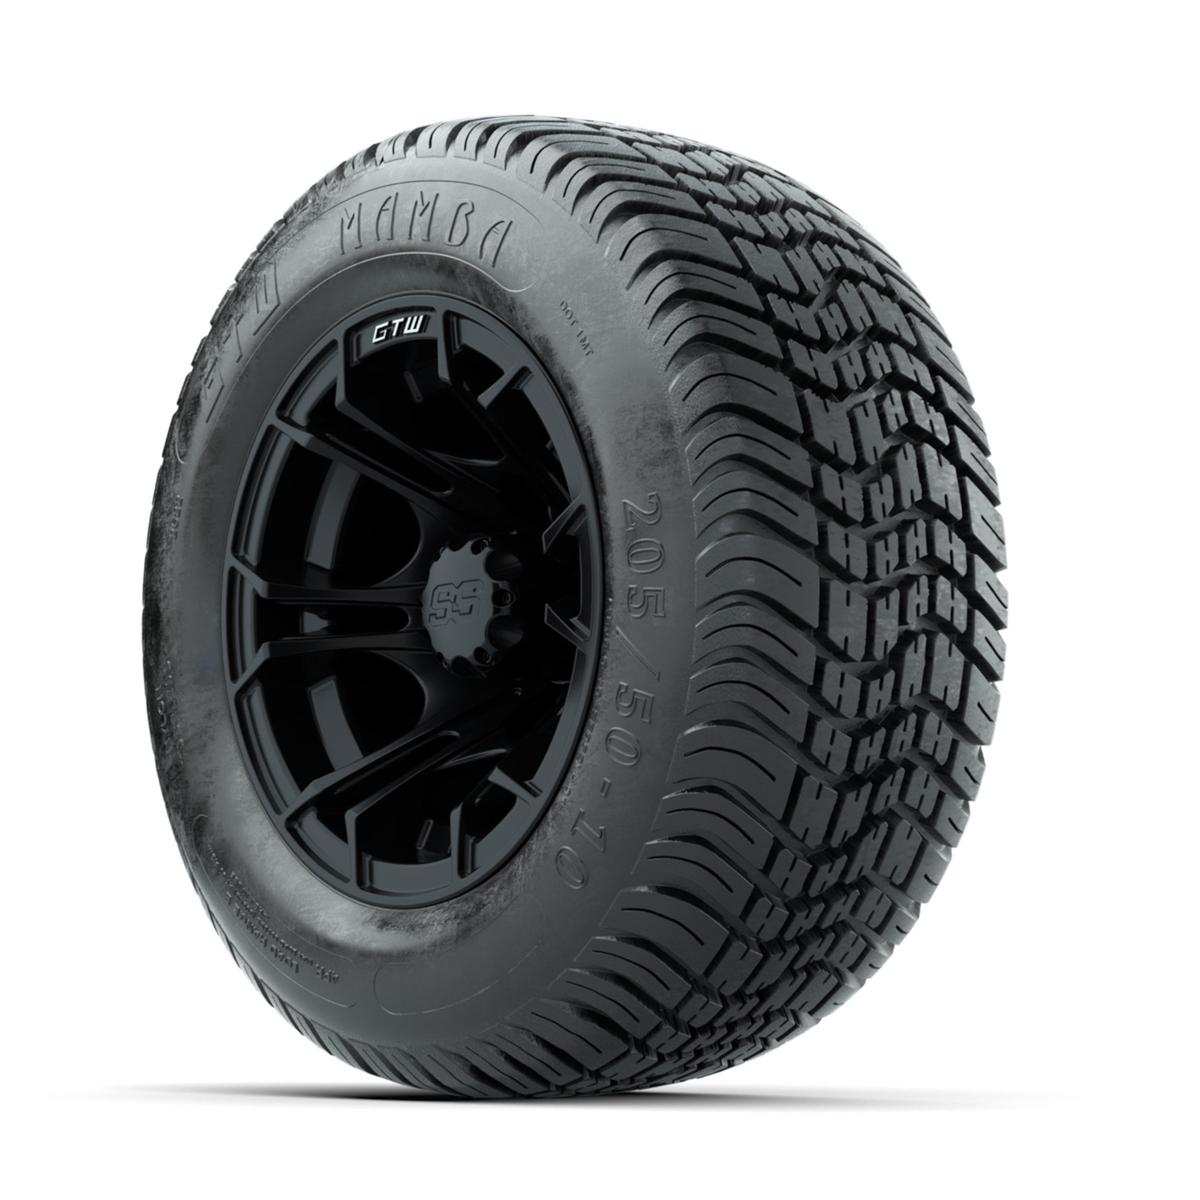 GTW Spyder Matte Black 10 in Wheels with 205/50-10 Mamba Street Tires – Full Set